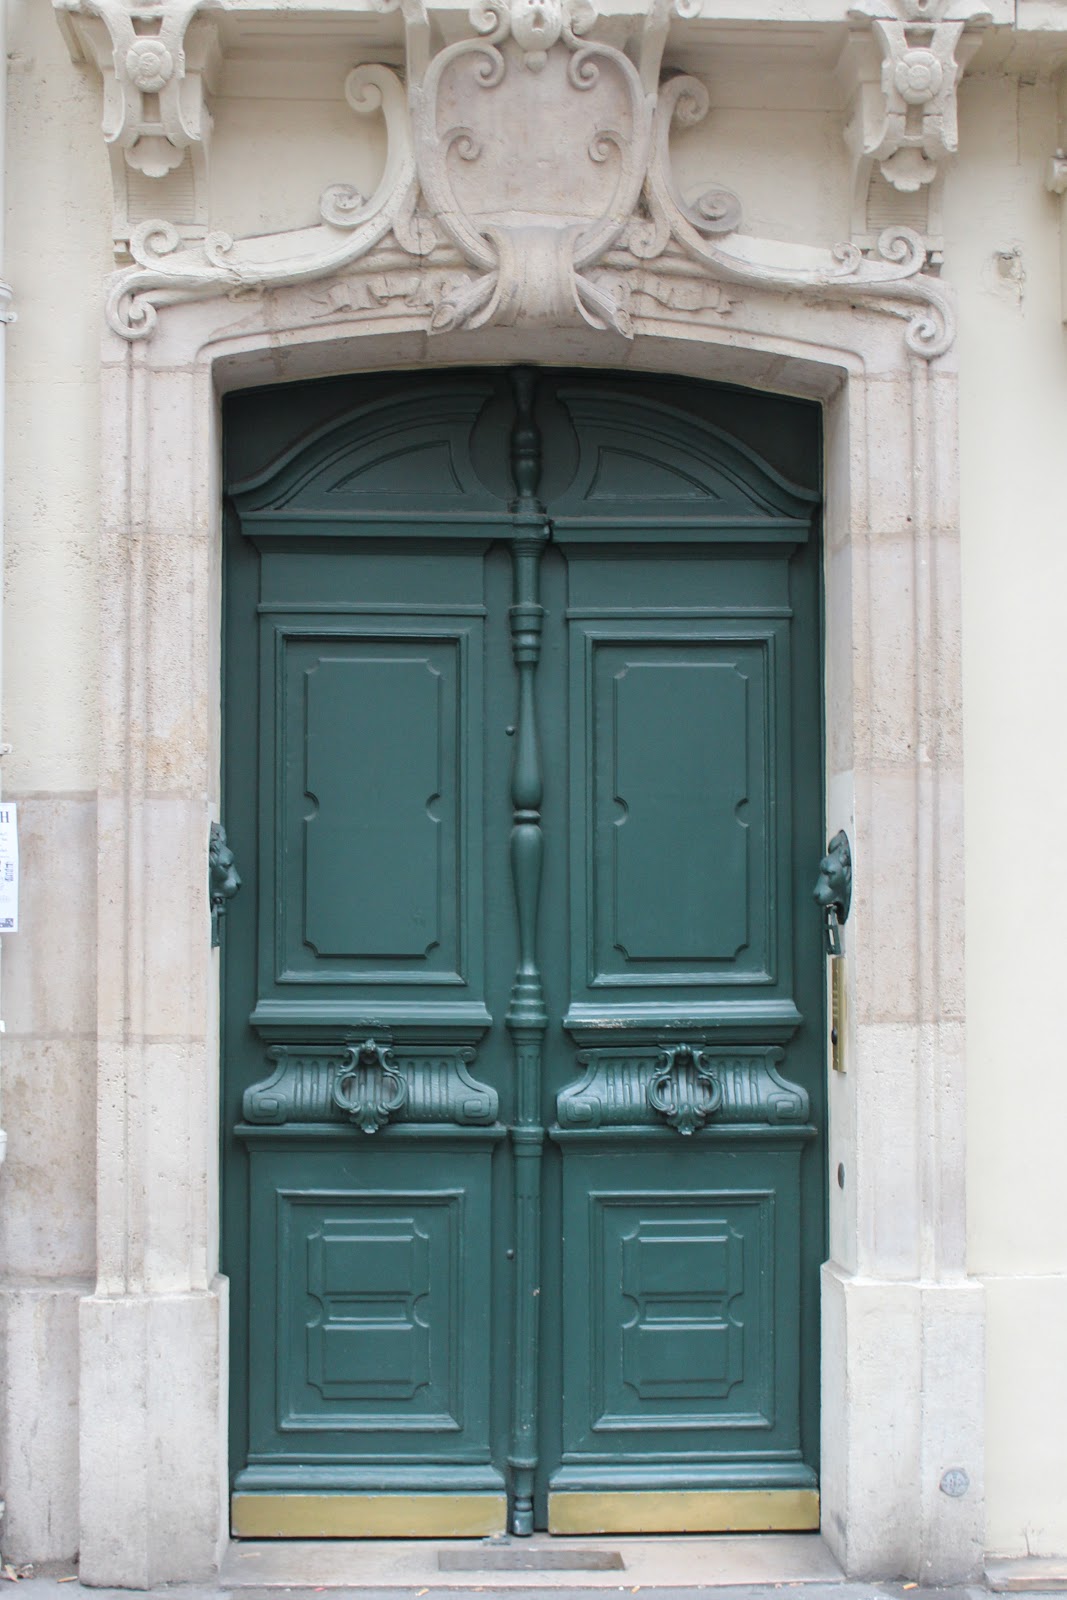 Dreams in HD: The Doors of Paris